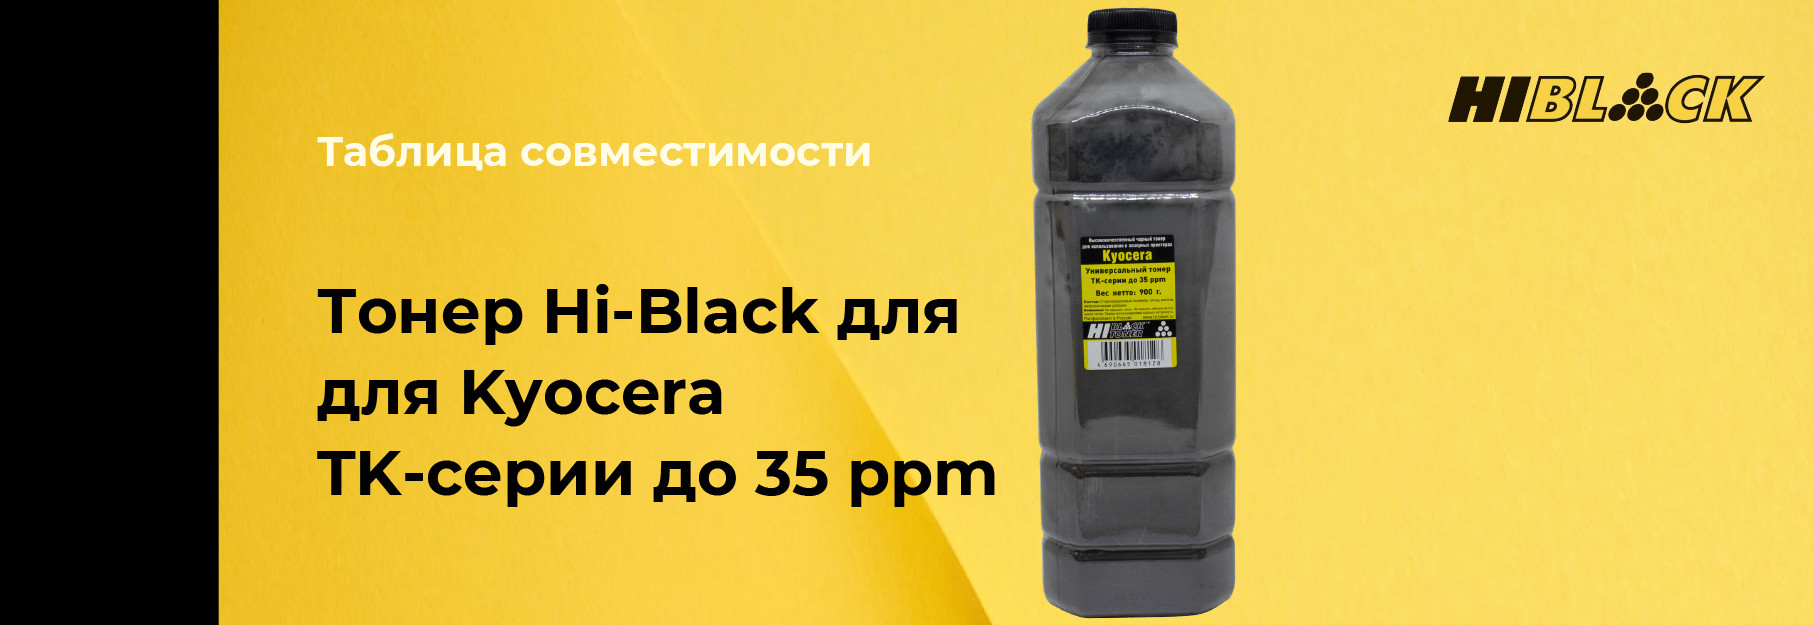 tablica-sovmestimosti-Hi-Black-Kyocera-TK-serii-do-35ppm.jpg